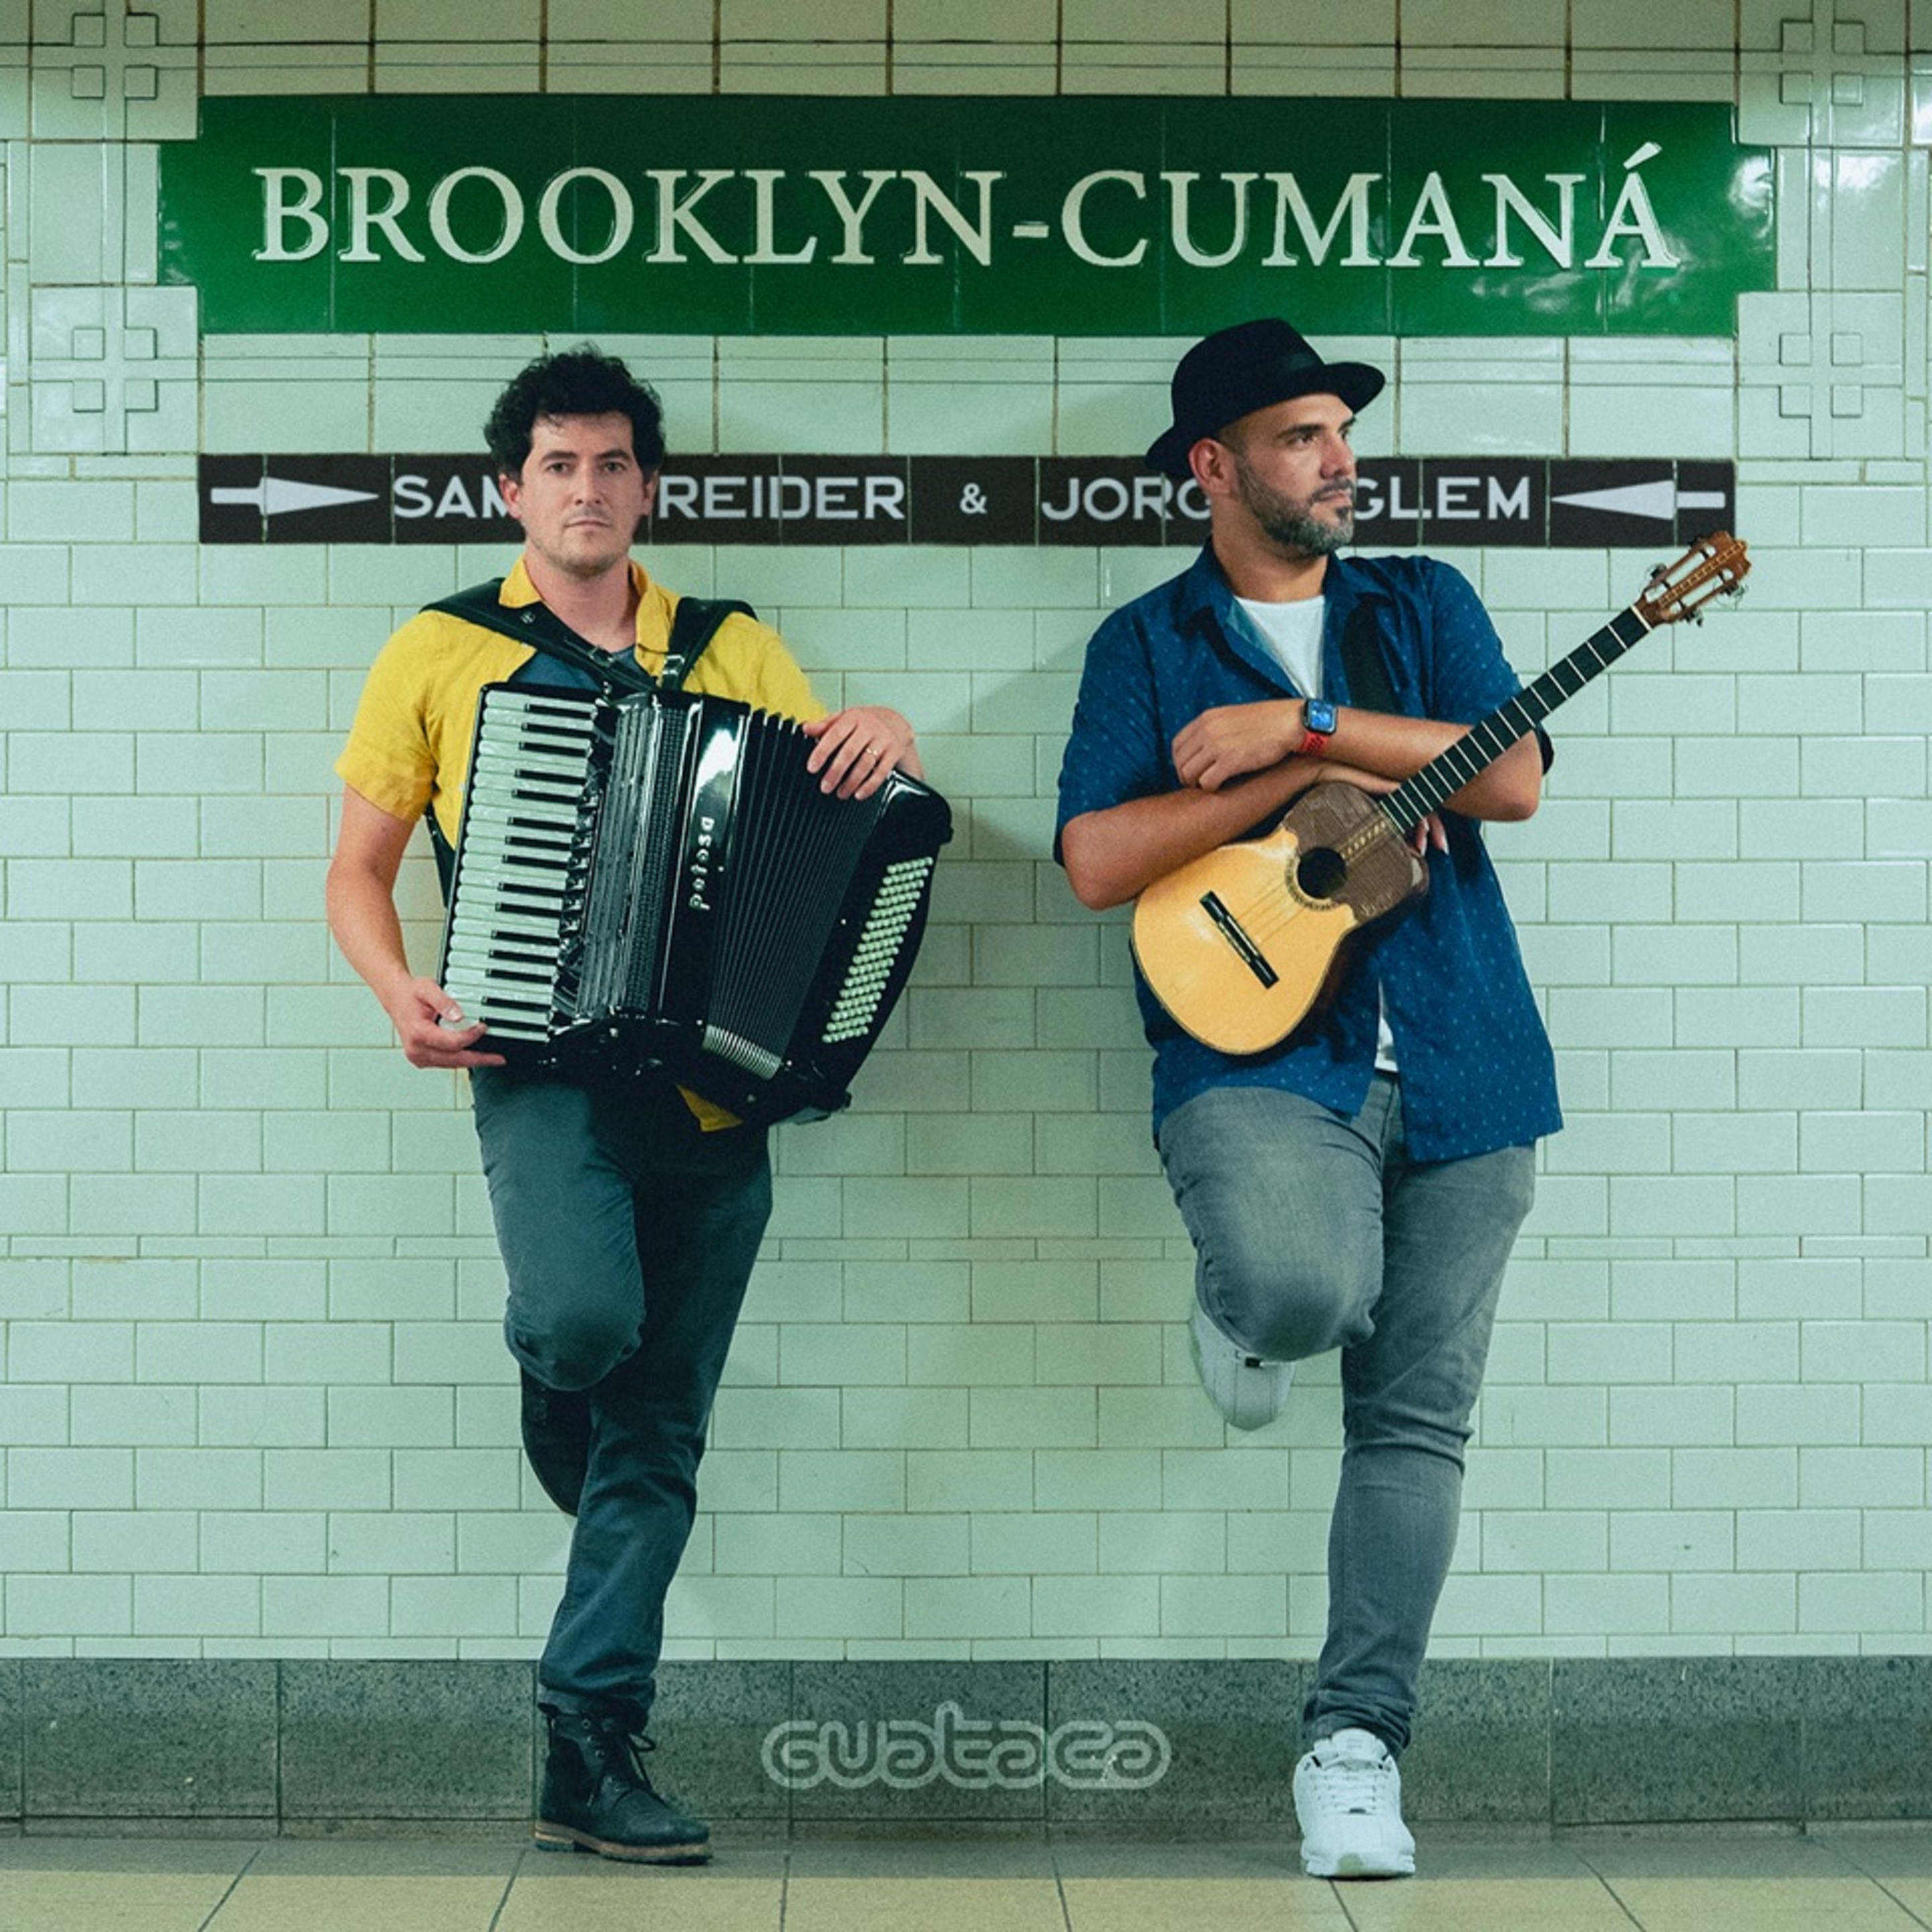 Venezuelan Cuatro Virtuoso Jorge Glem & Accordionist Sam Reider Release New Album "Brooklyn-Cumaná" on November 4, 2022 + First Single "Crucigrama" (Sept. 30)